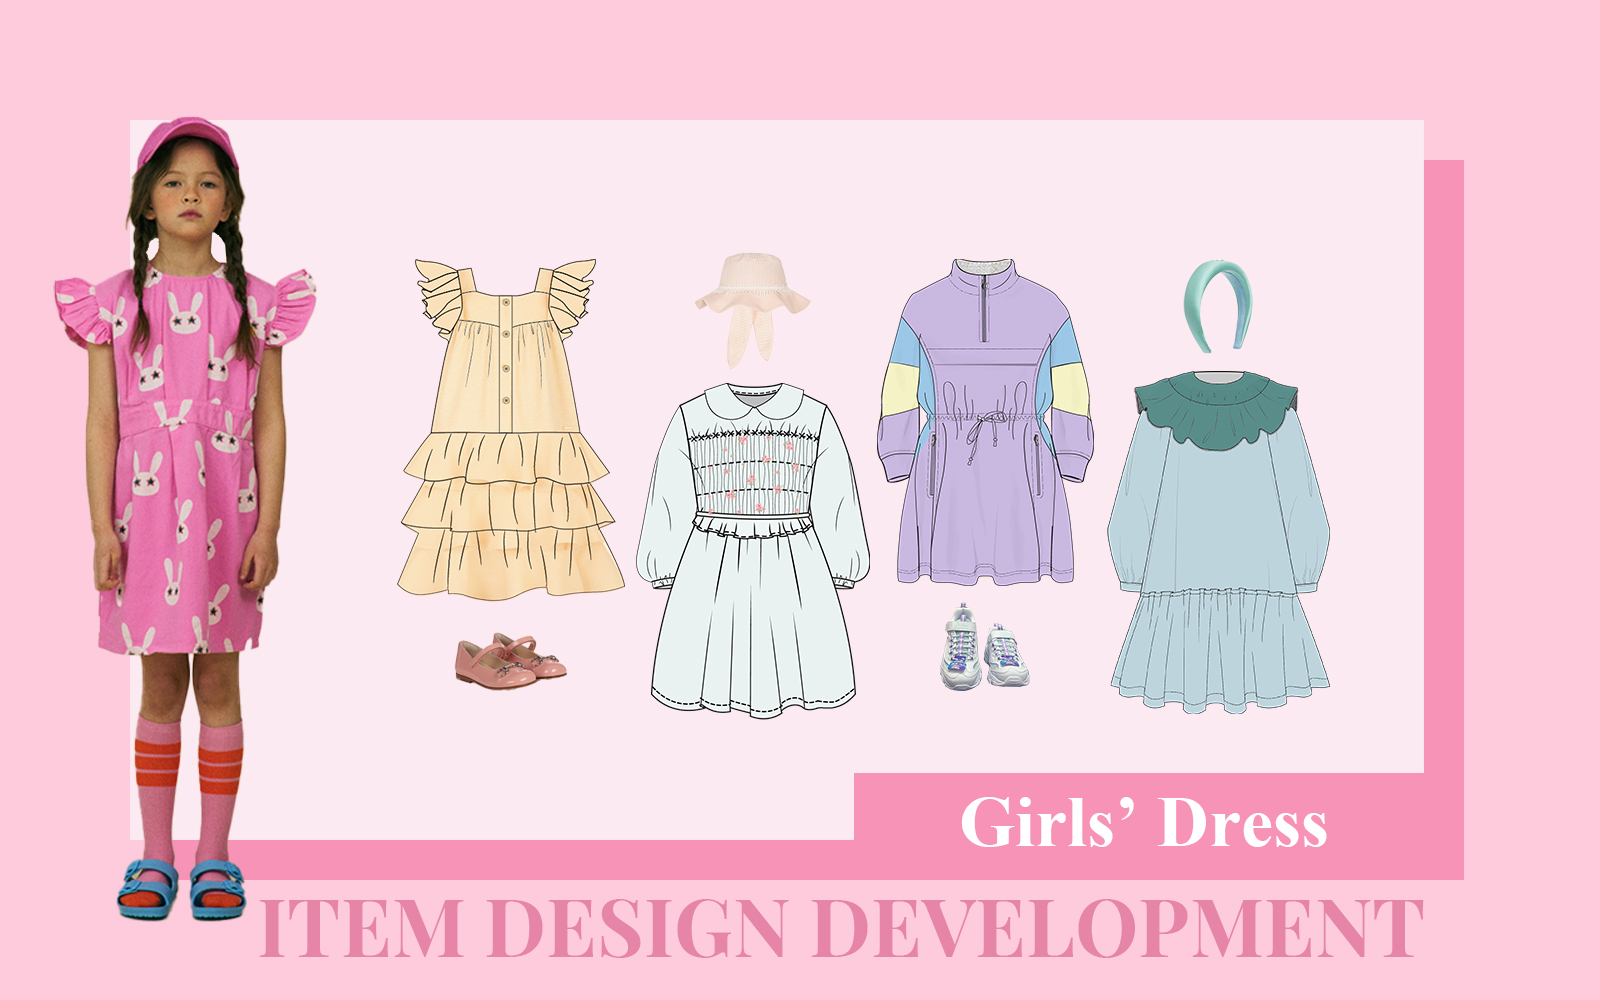 Active & Casual -- The Design Development of Girls' Dress